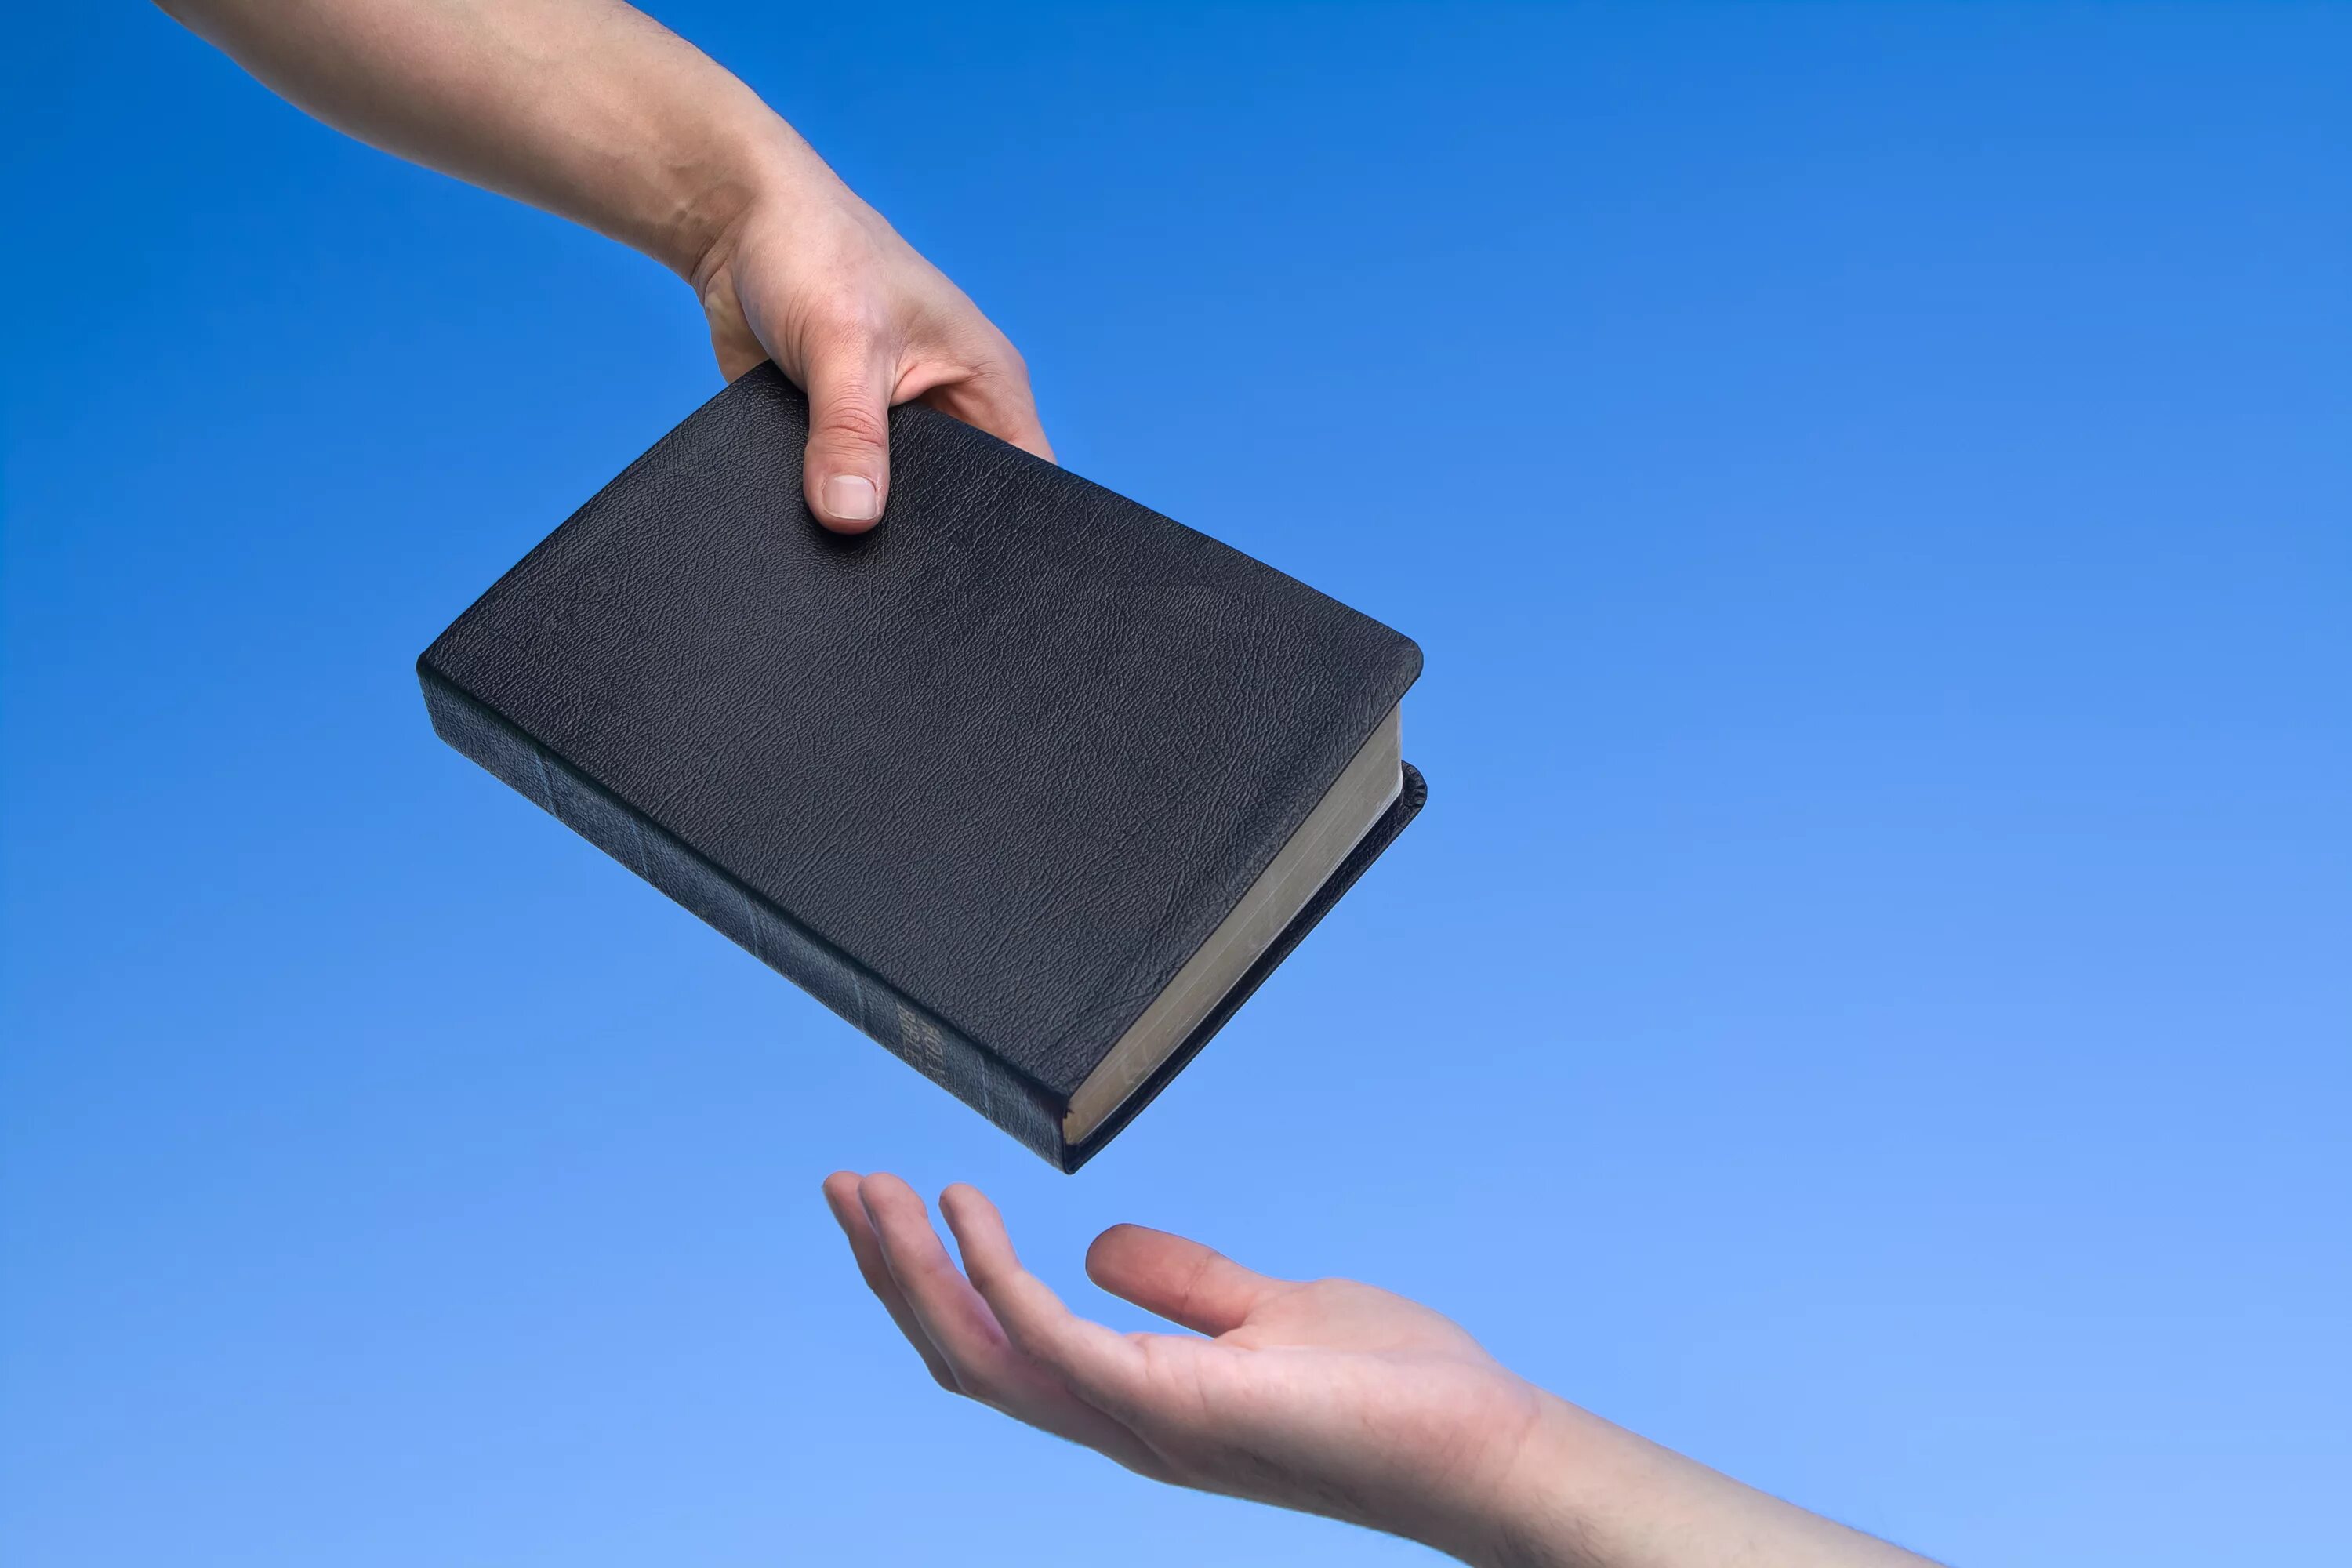 Give that book to. Передает книгу. Рука дает. Человек с Библией в руках. Библия в руках.